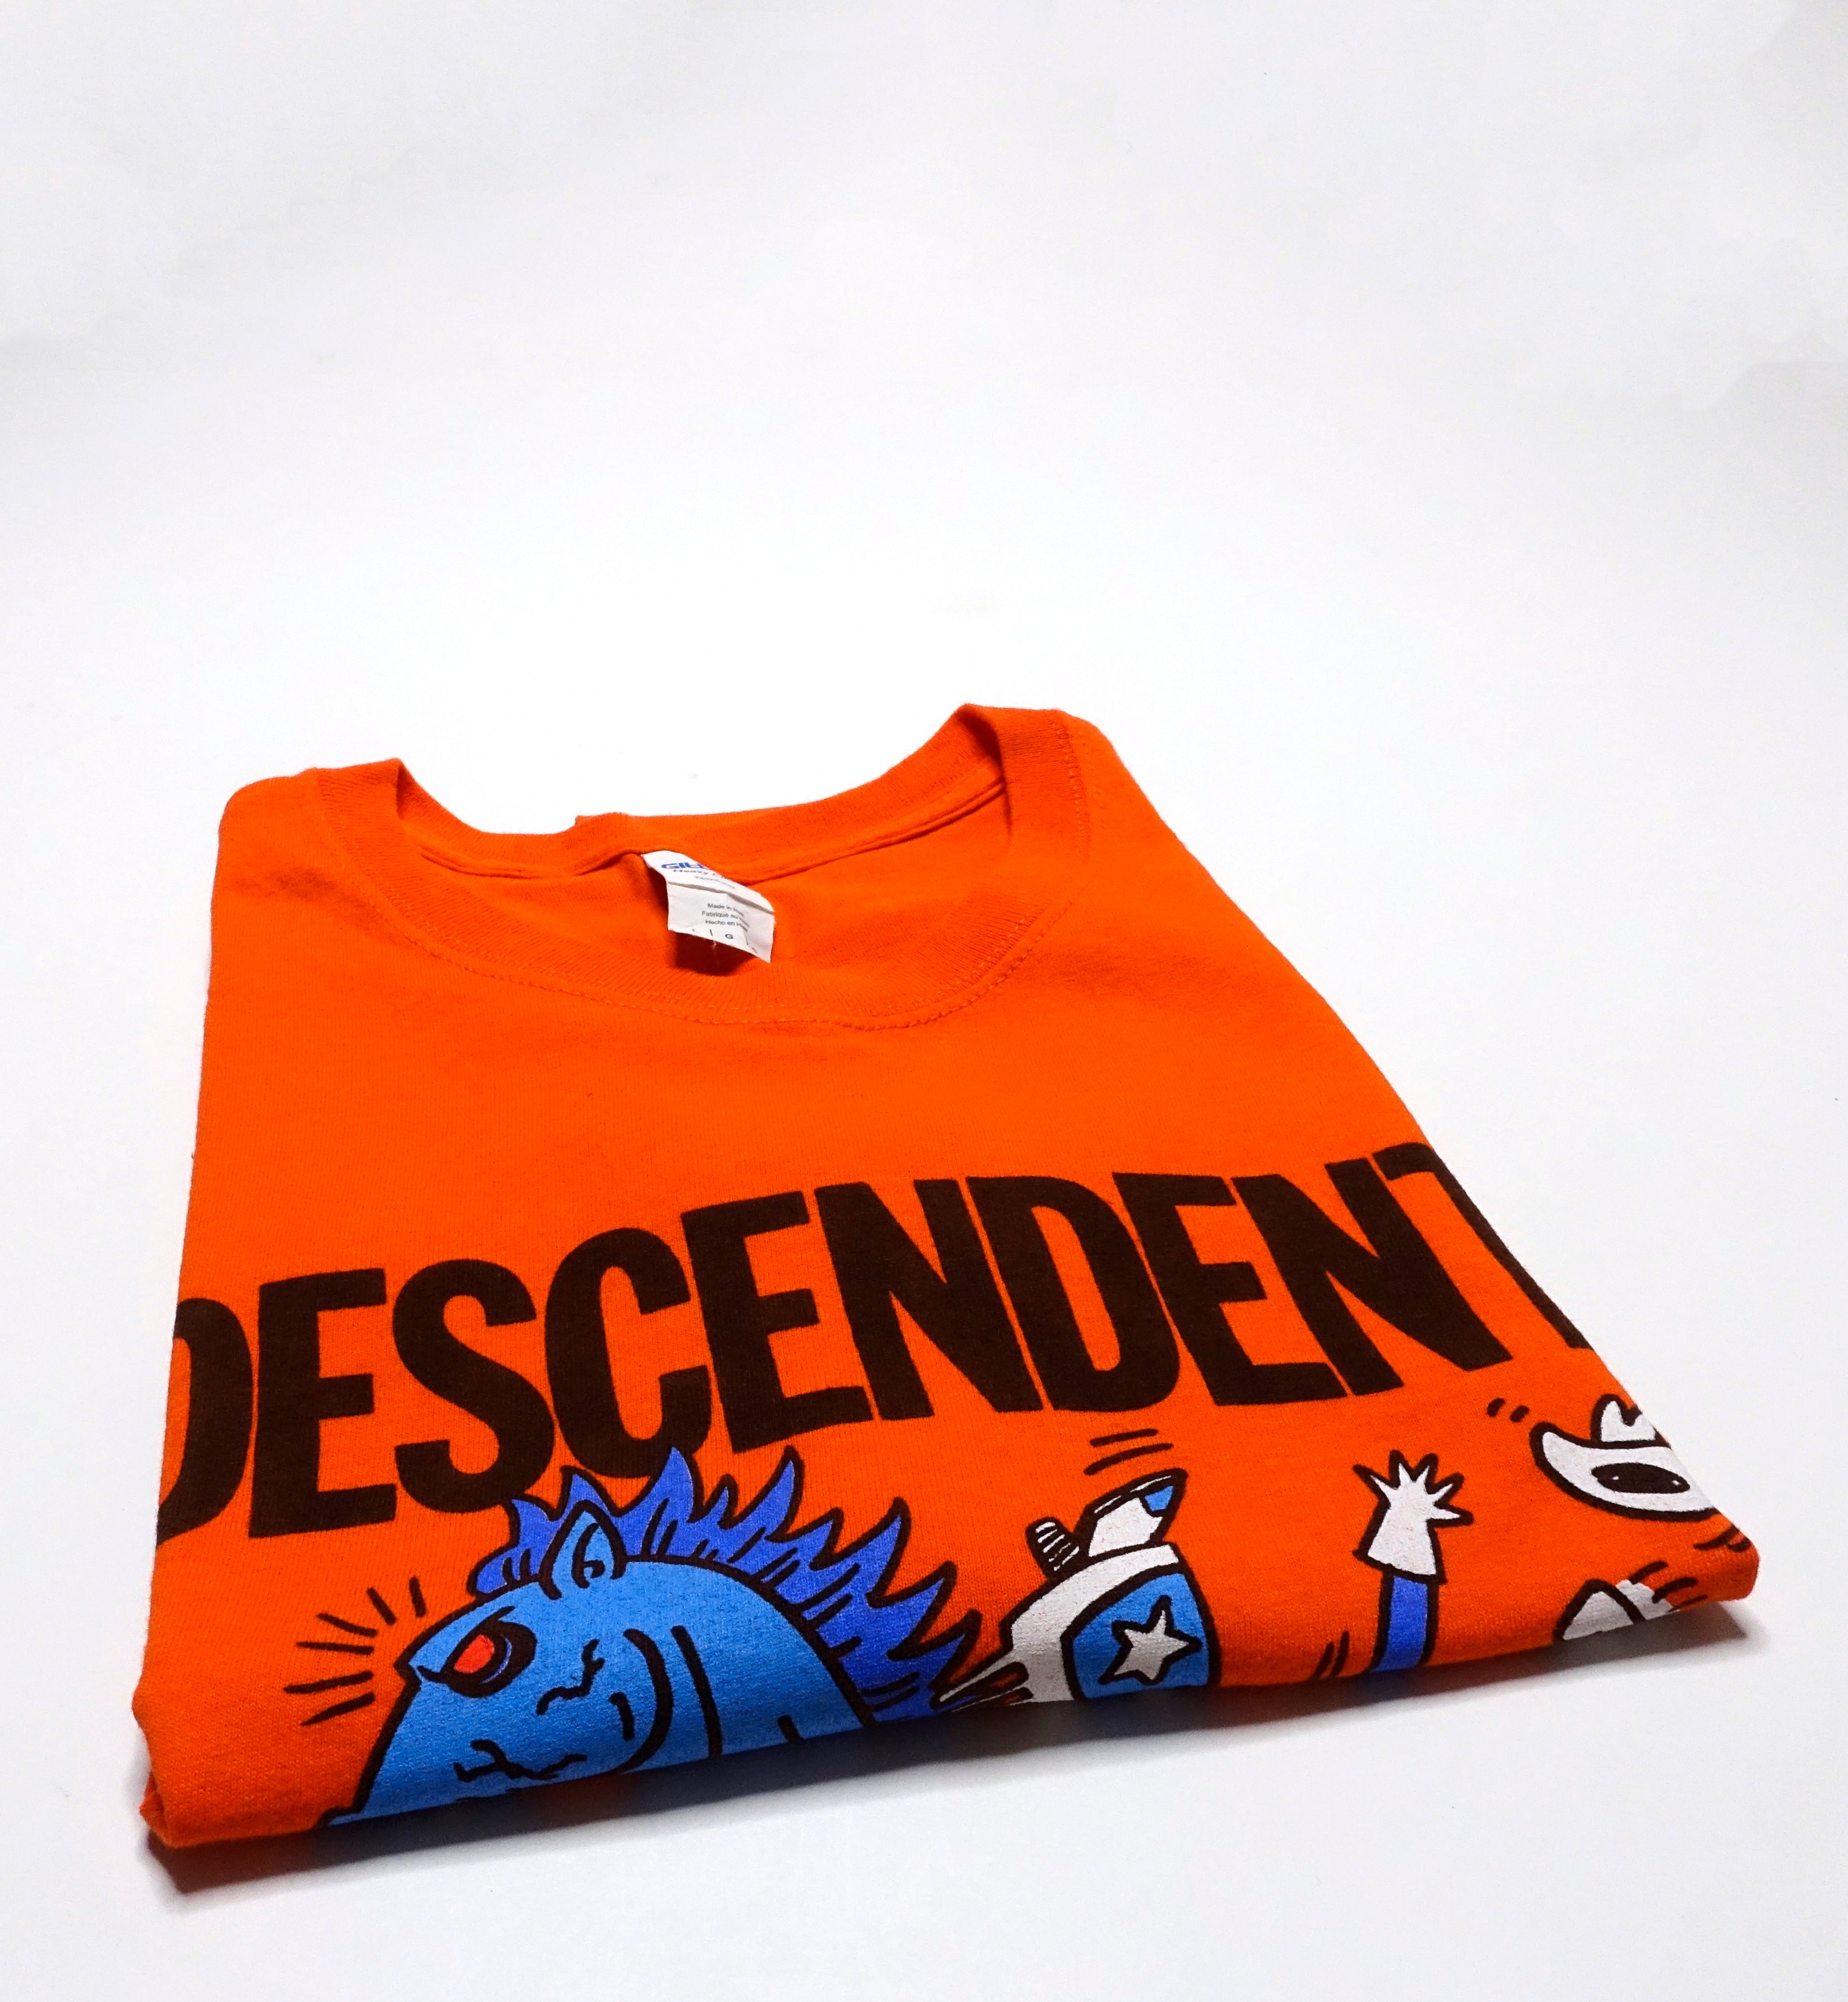 Descendents - Denver Riot Fest and Rodeo 2016 Tour Shirt Size Large